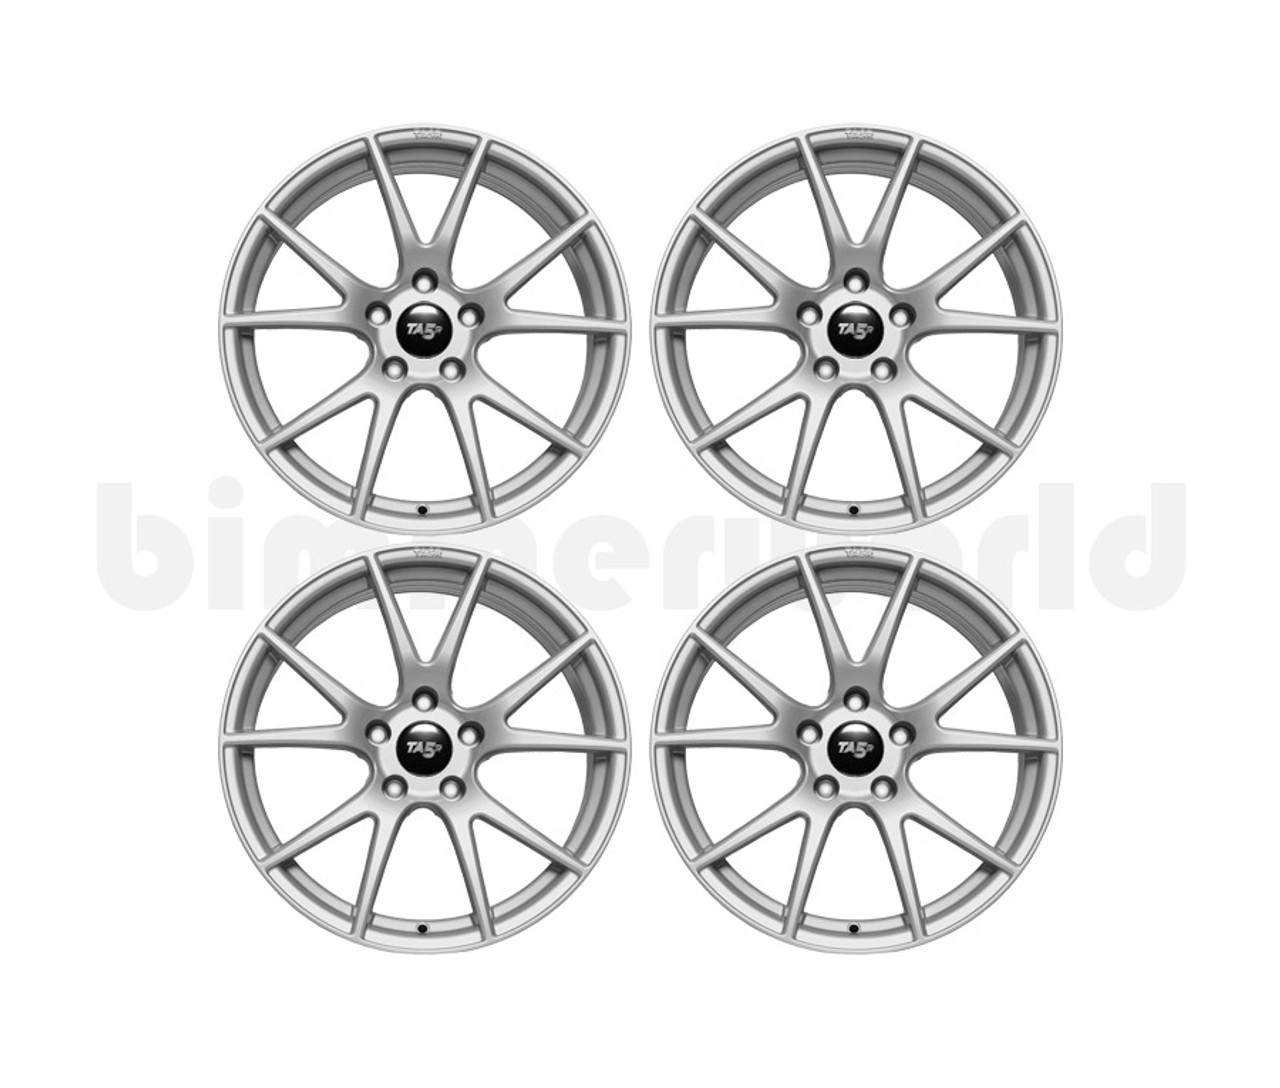 BimmerWorld 18x9.0 TA5R Wheel Set - E36, E46, F3X, E60 Xi, Z3, E85